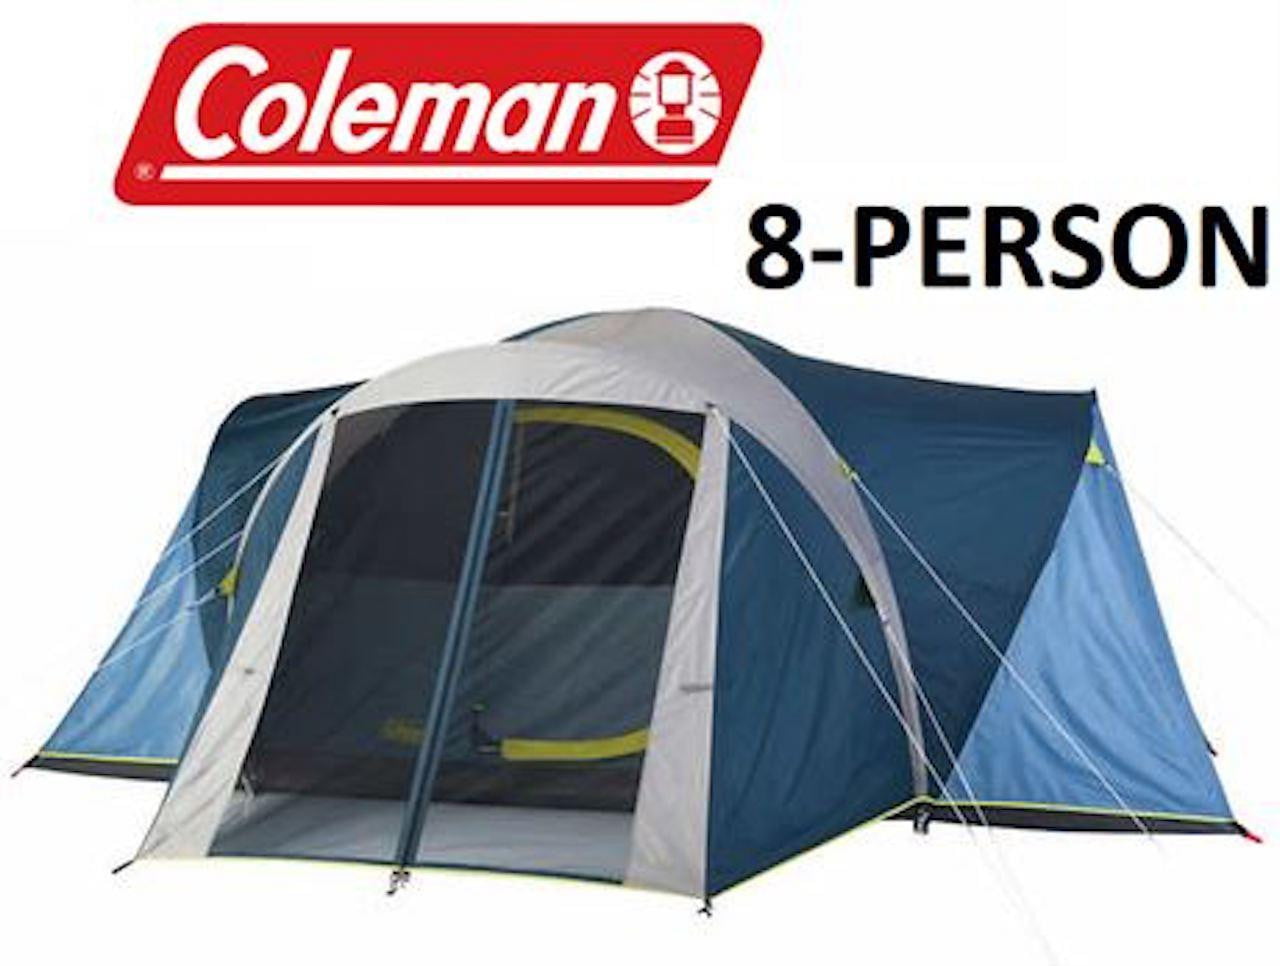 8 Person Tent Gear coleman arrowhead tent,therugbycatalog.com 1367928 COLEM...